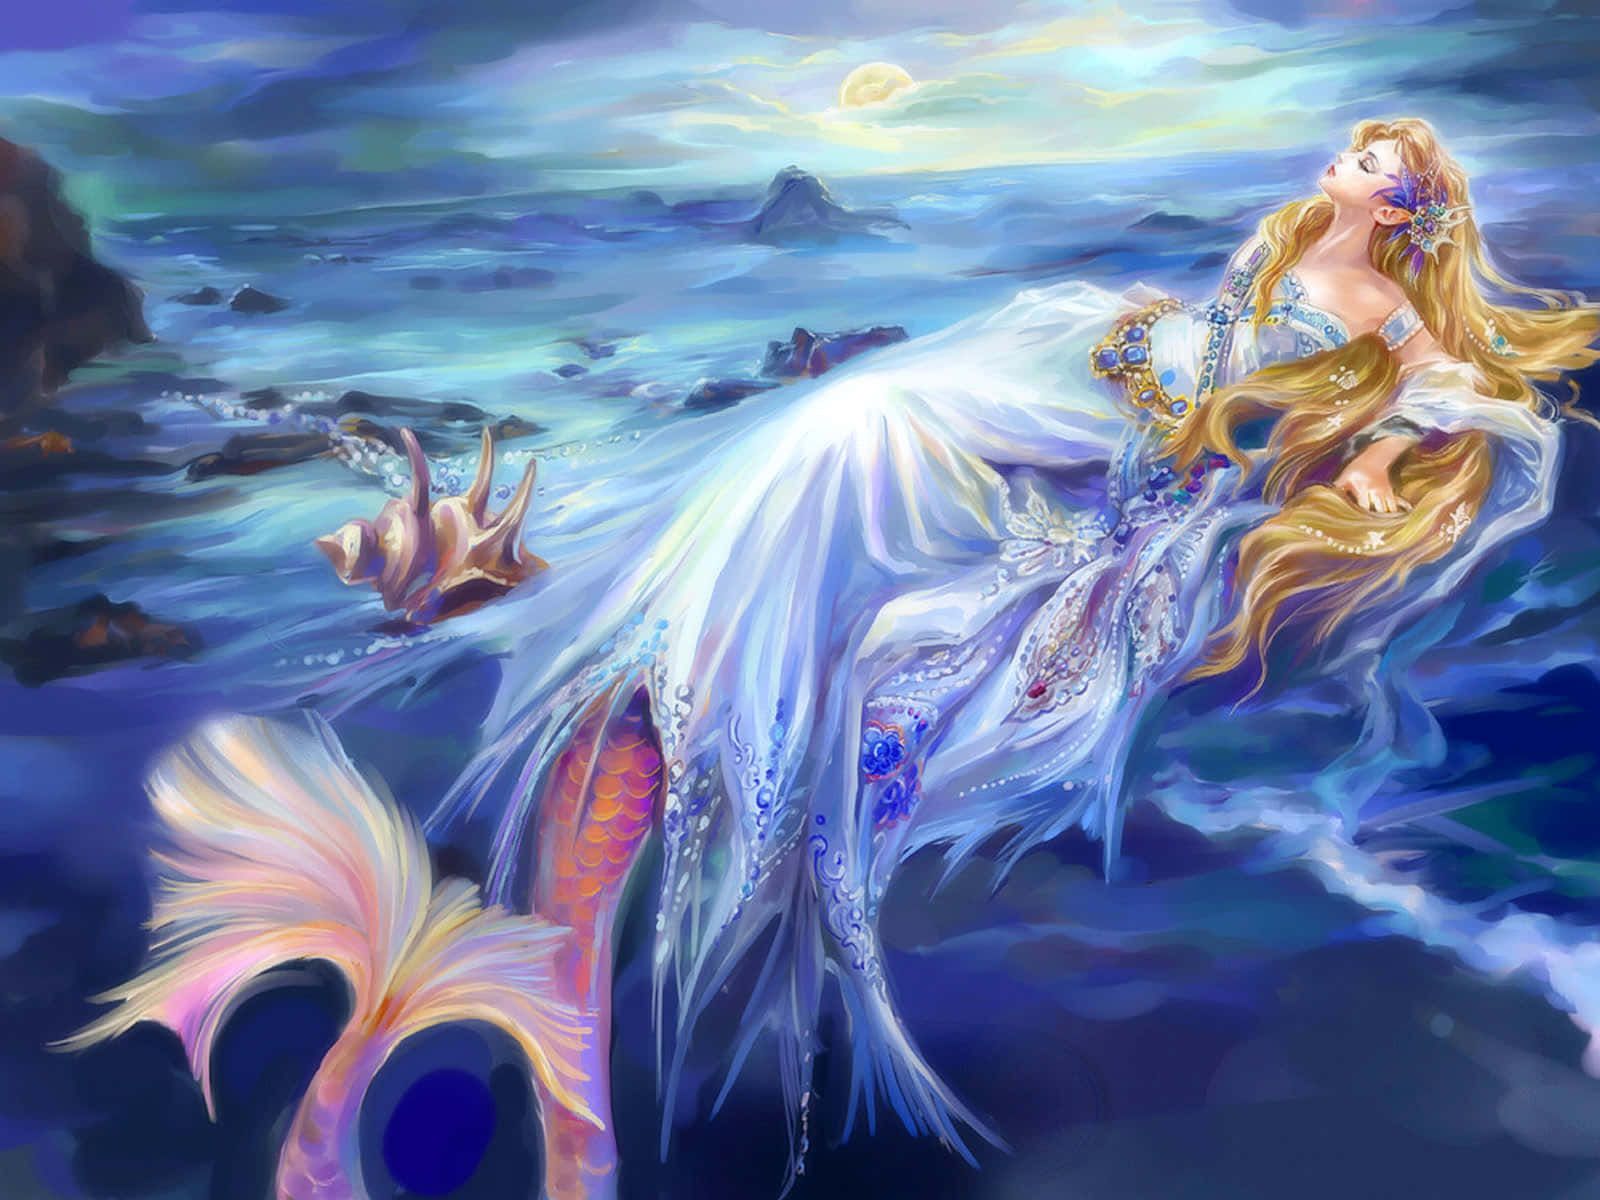 Free Mermaids Wallpaper Downloads, Mermaids Wallpaper for FREE